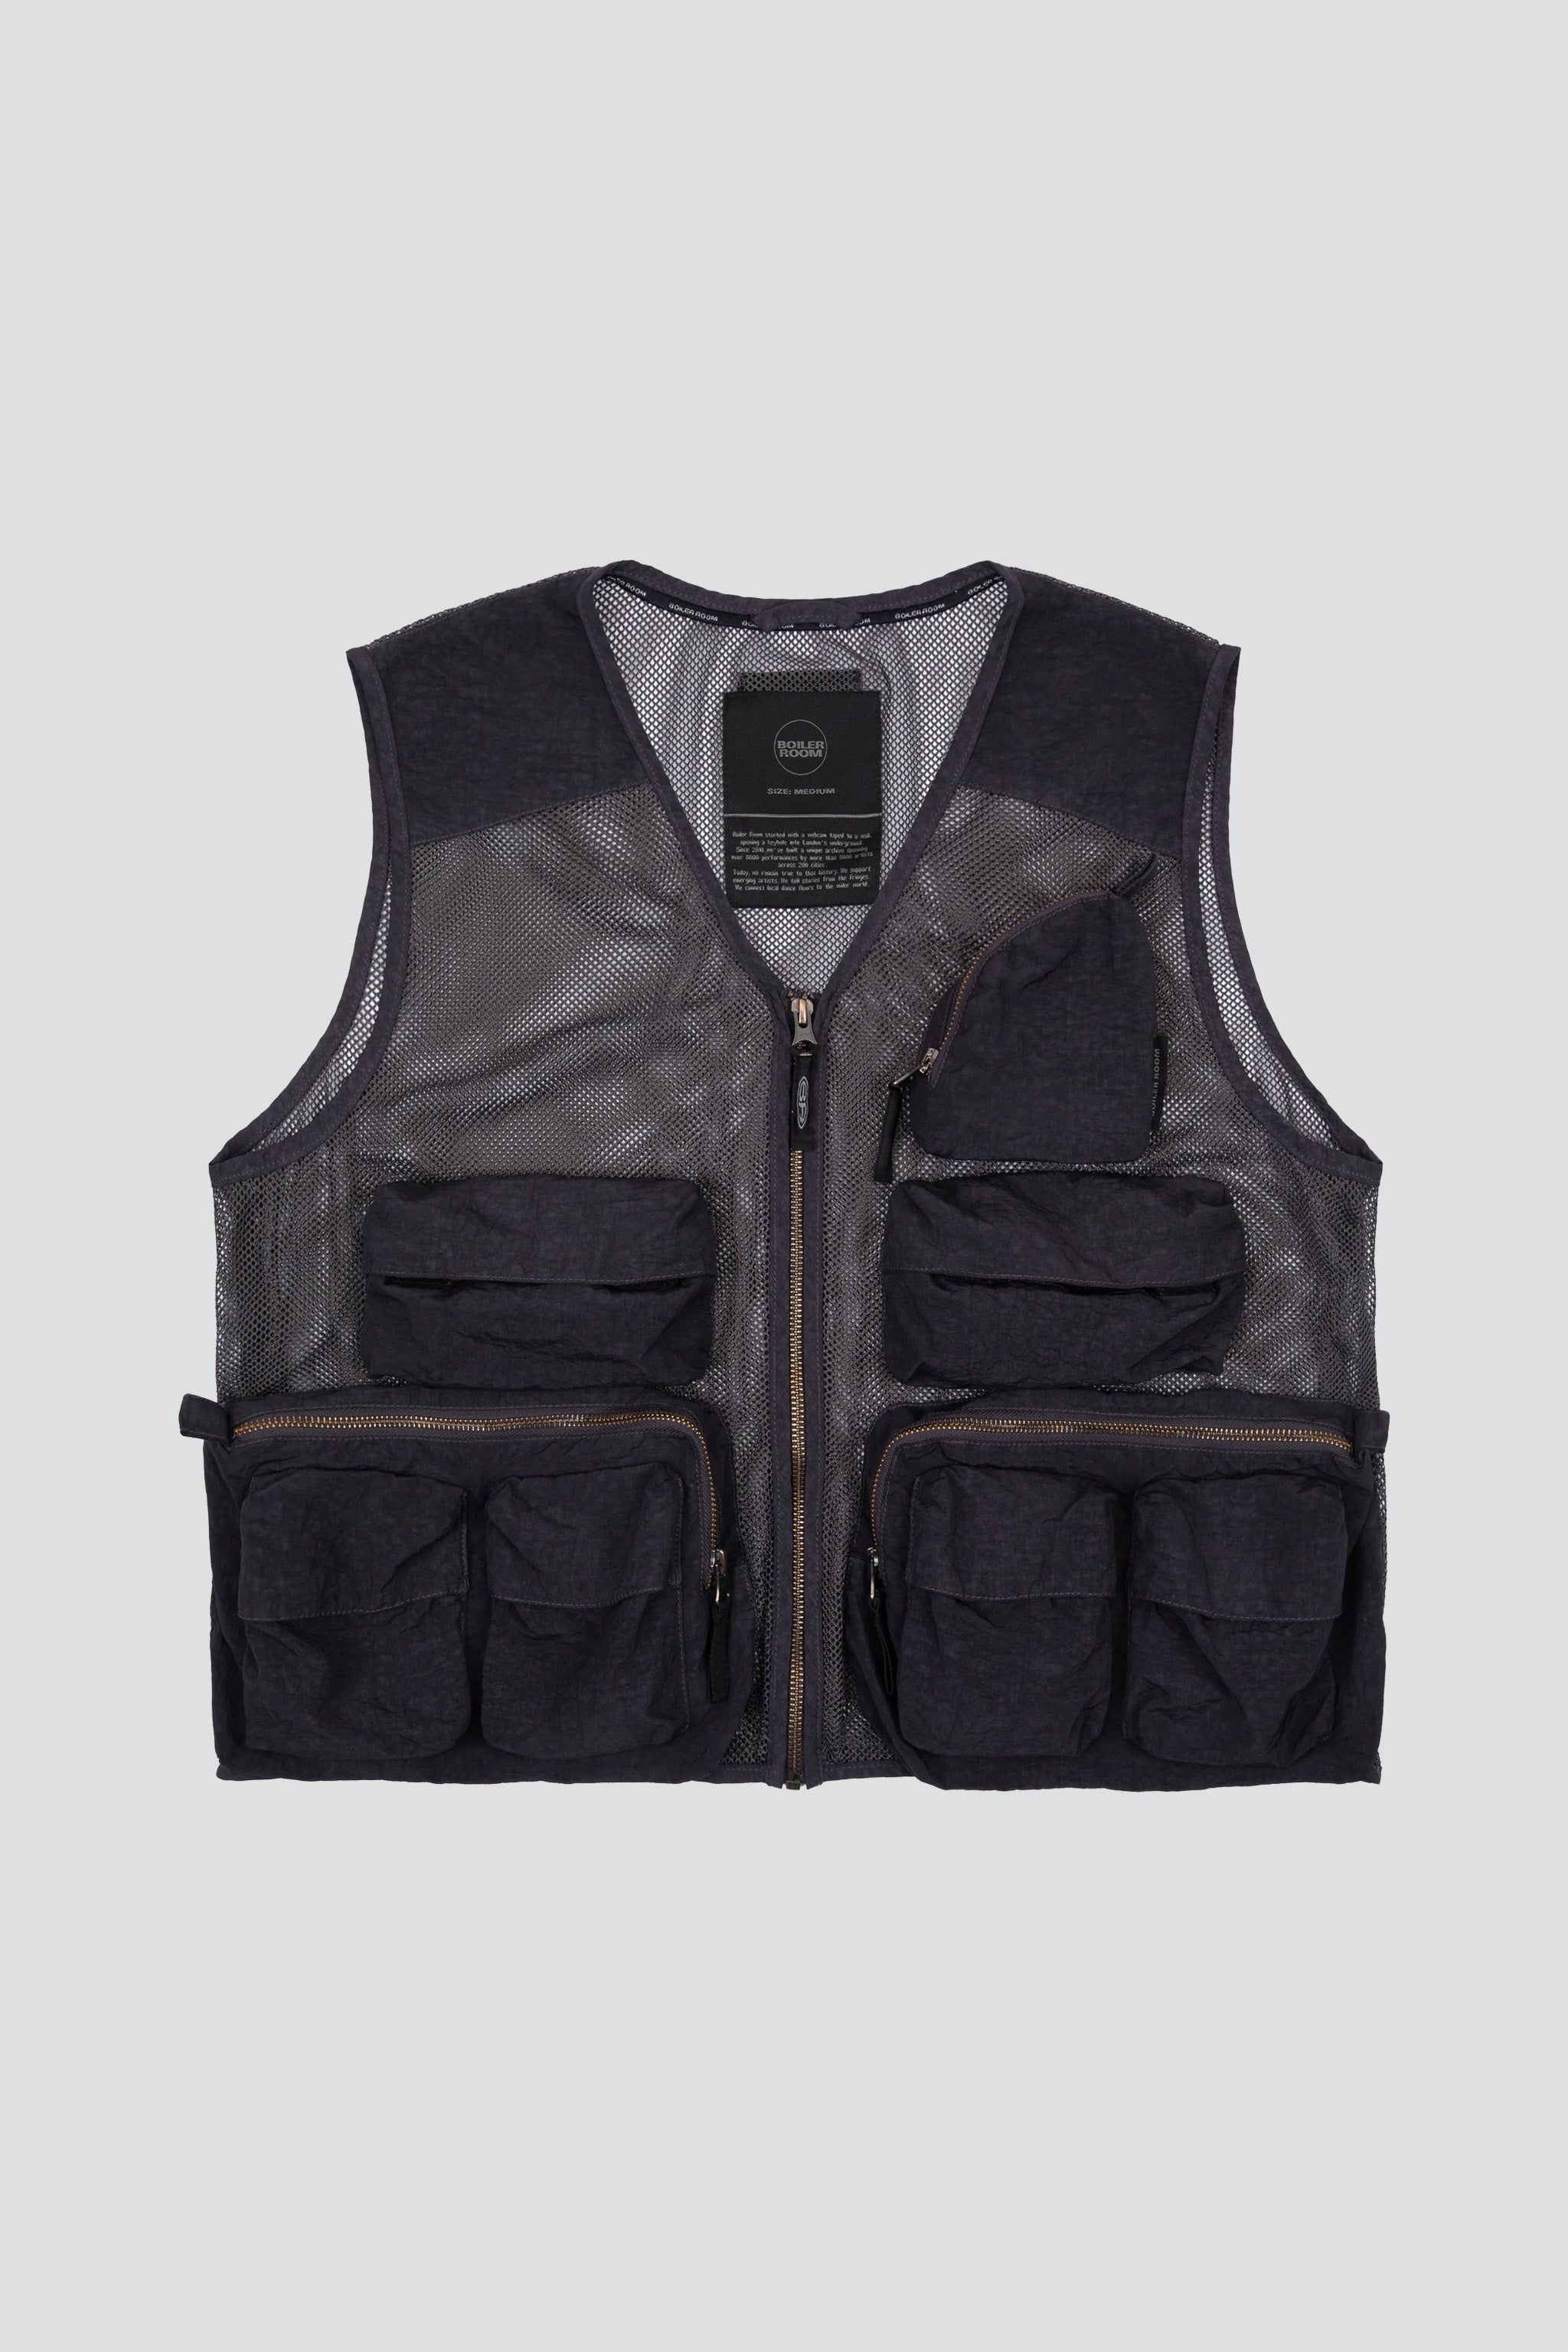 Black Mesh Cargo Vest